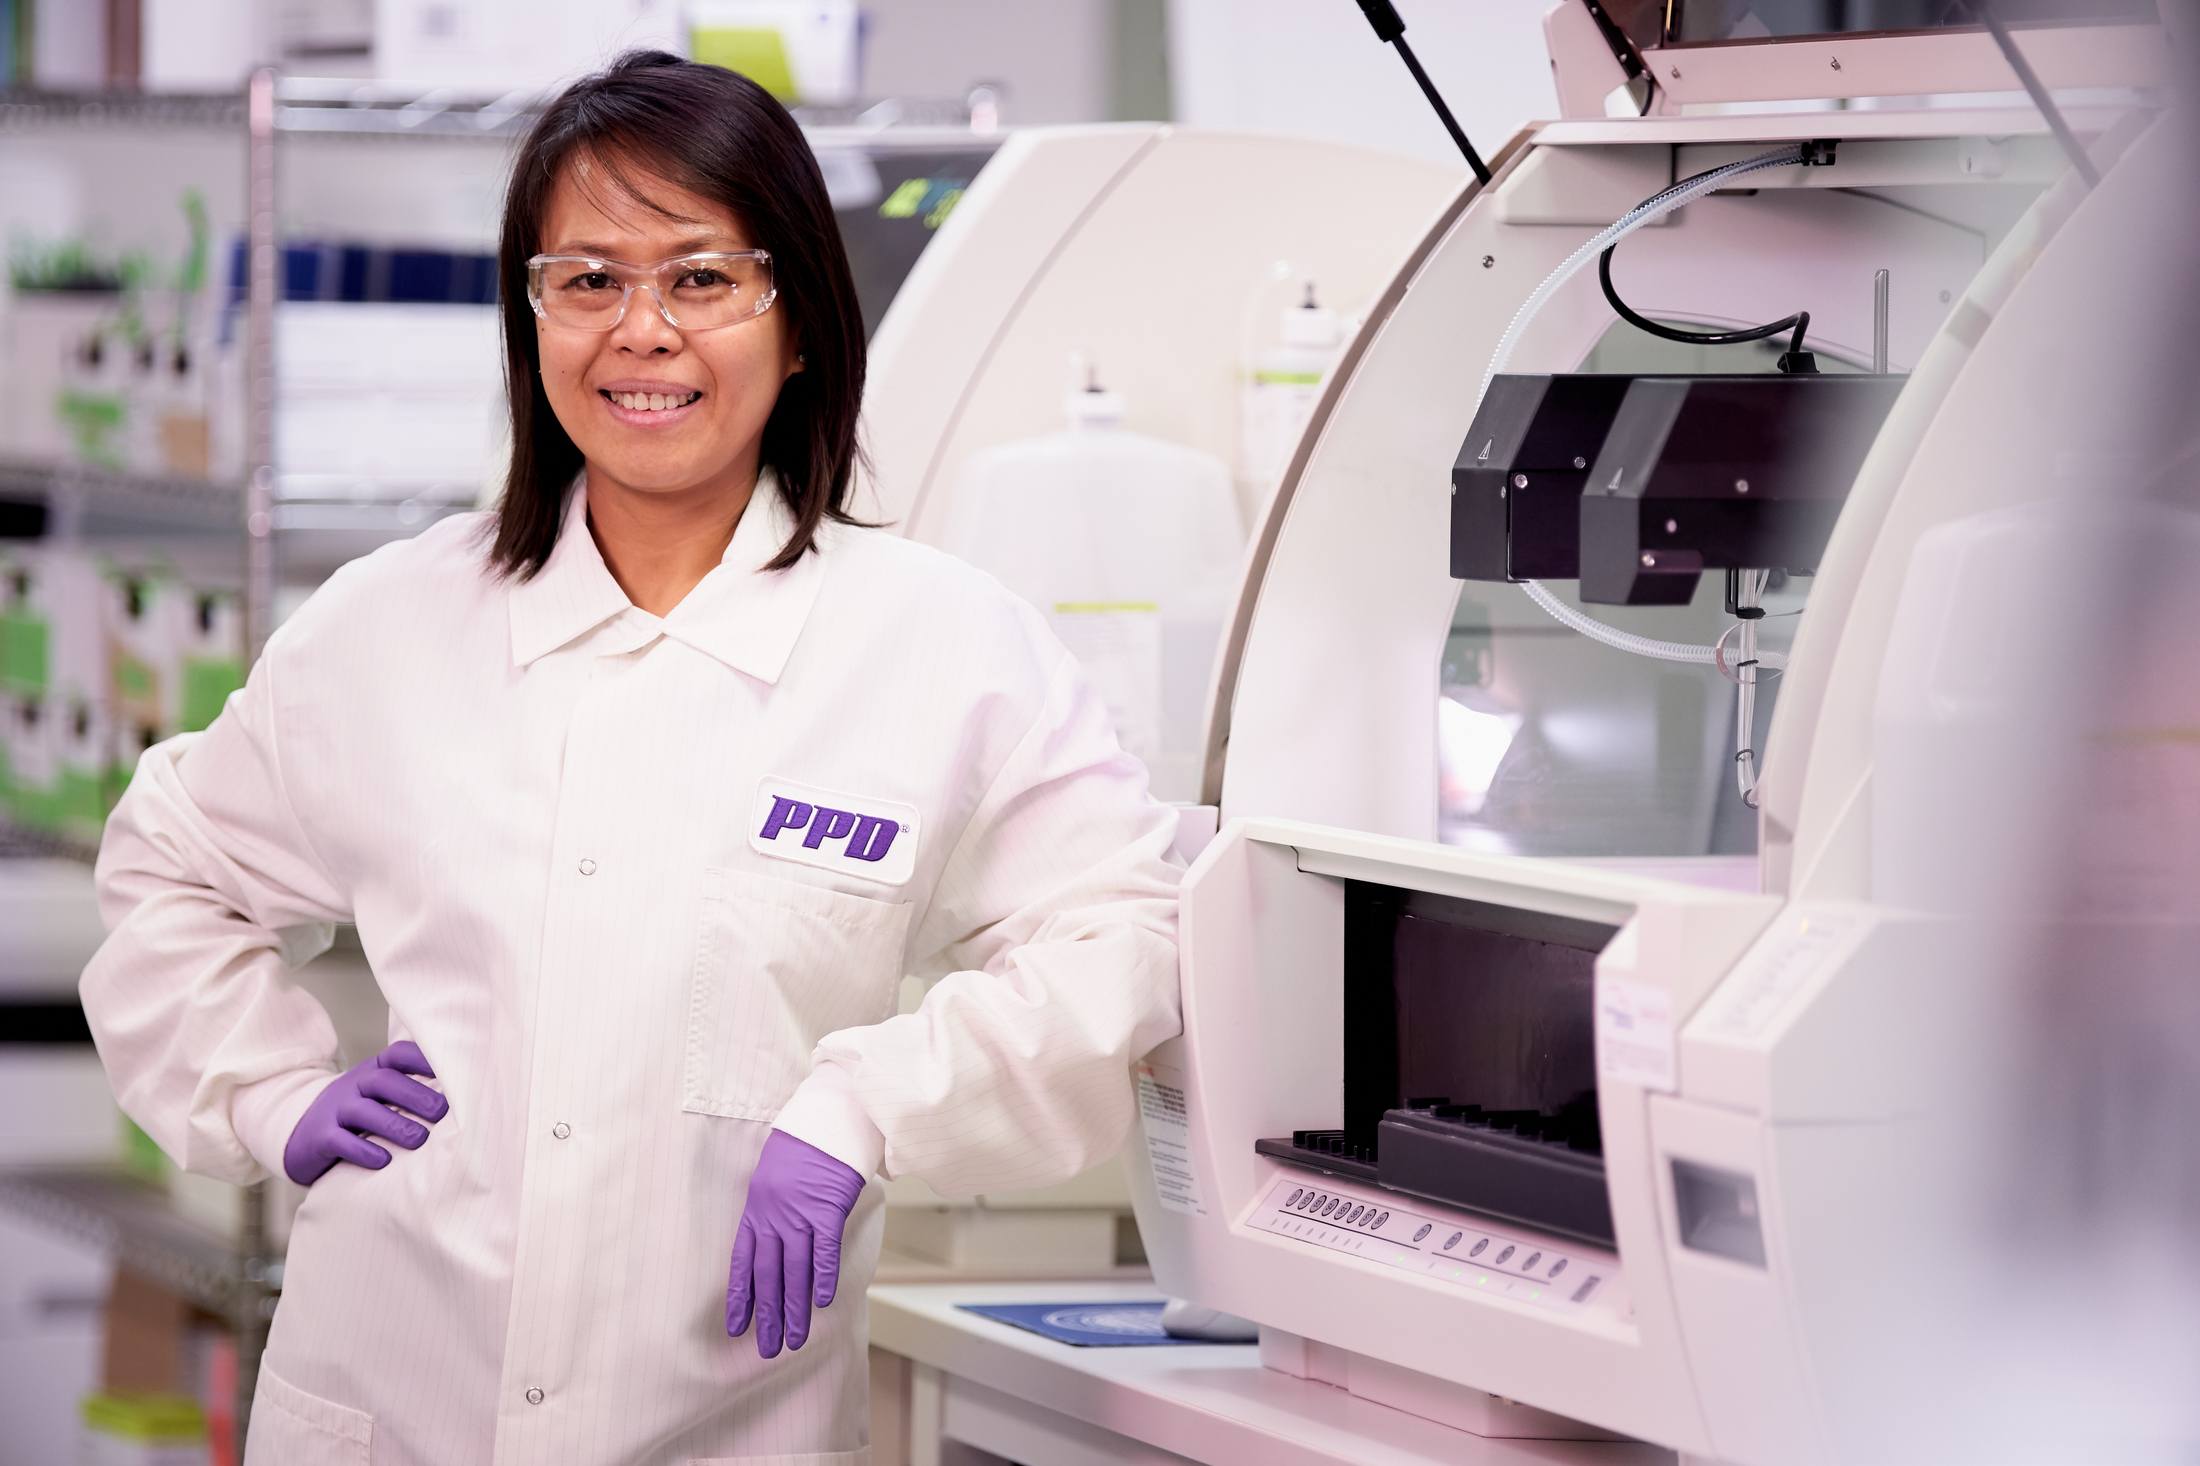 female scientist posing with lab equipment